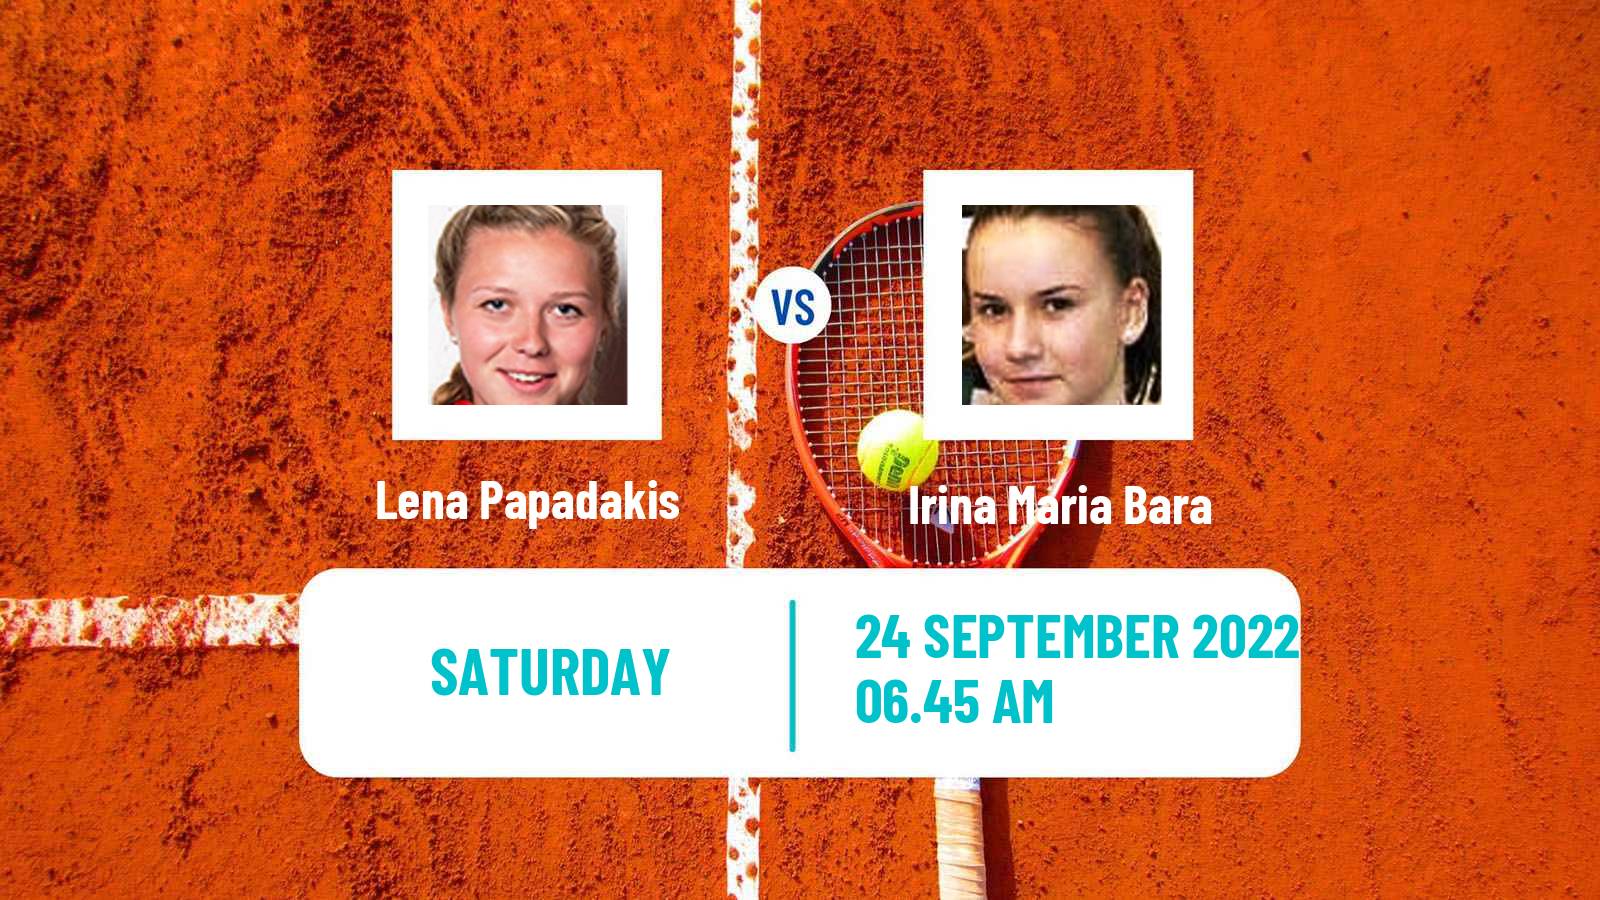 Tennis WTA Parma Lena Papadakis - Irina Maria Bara